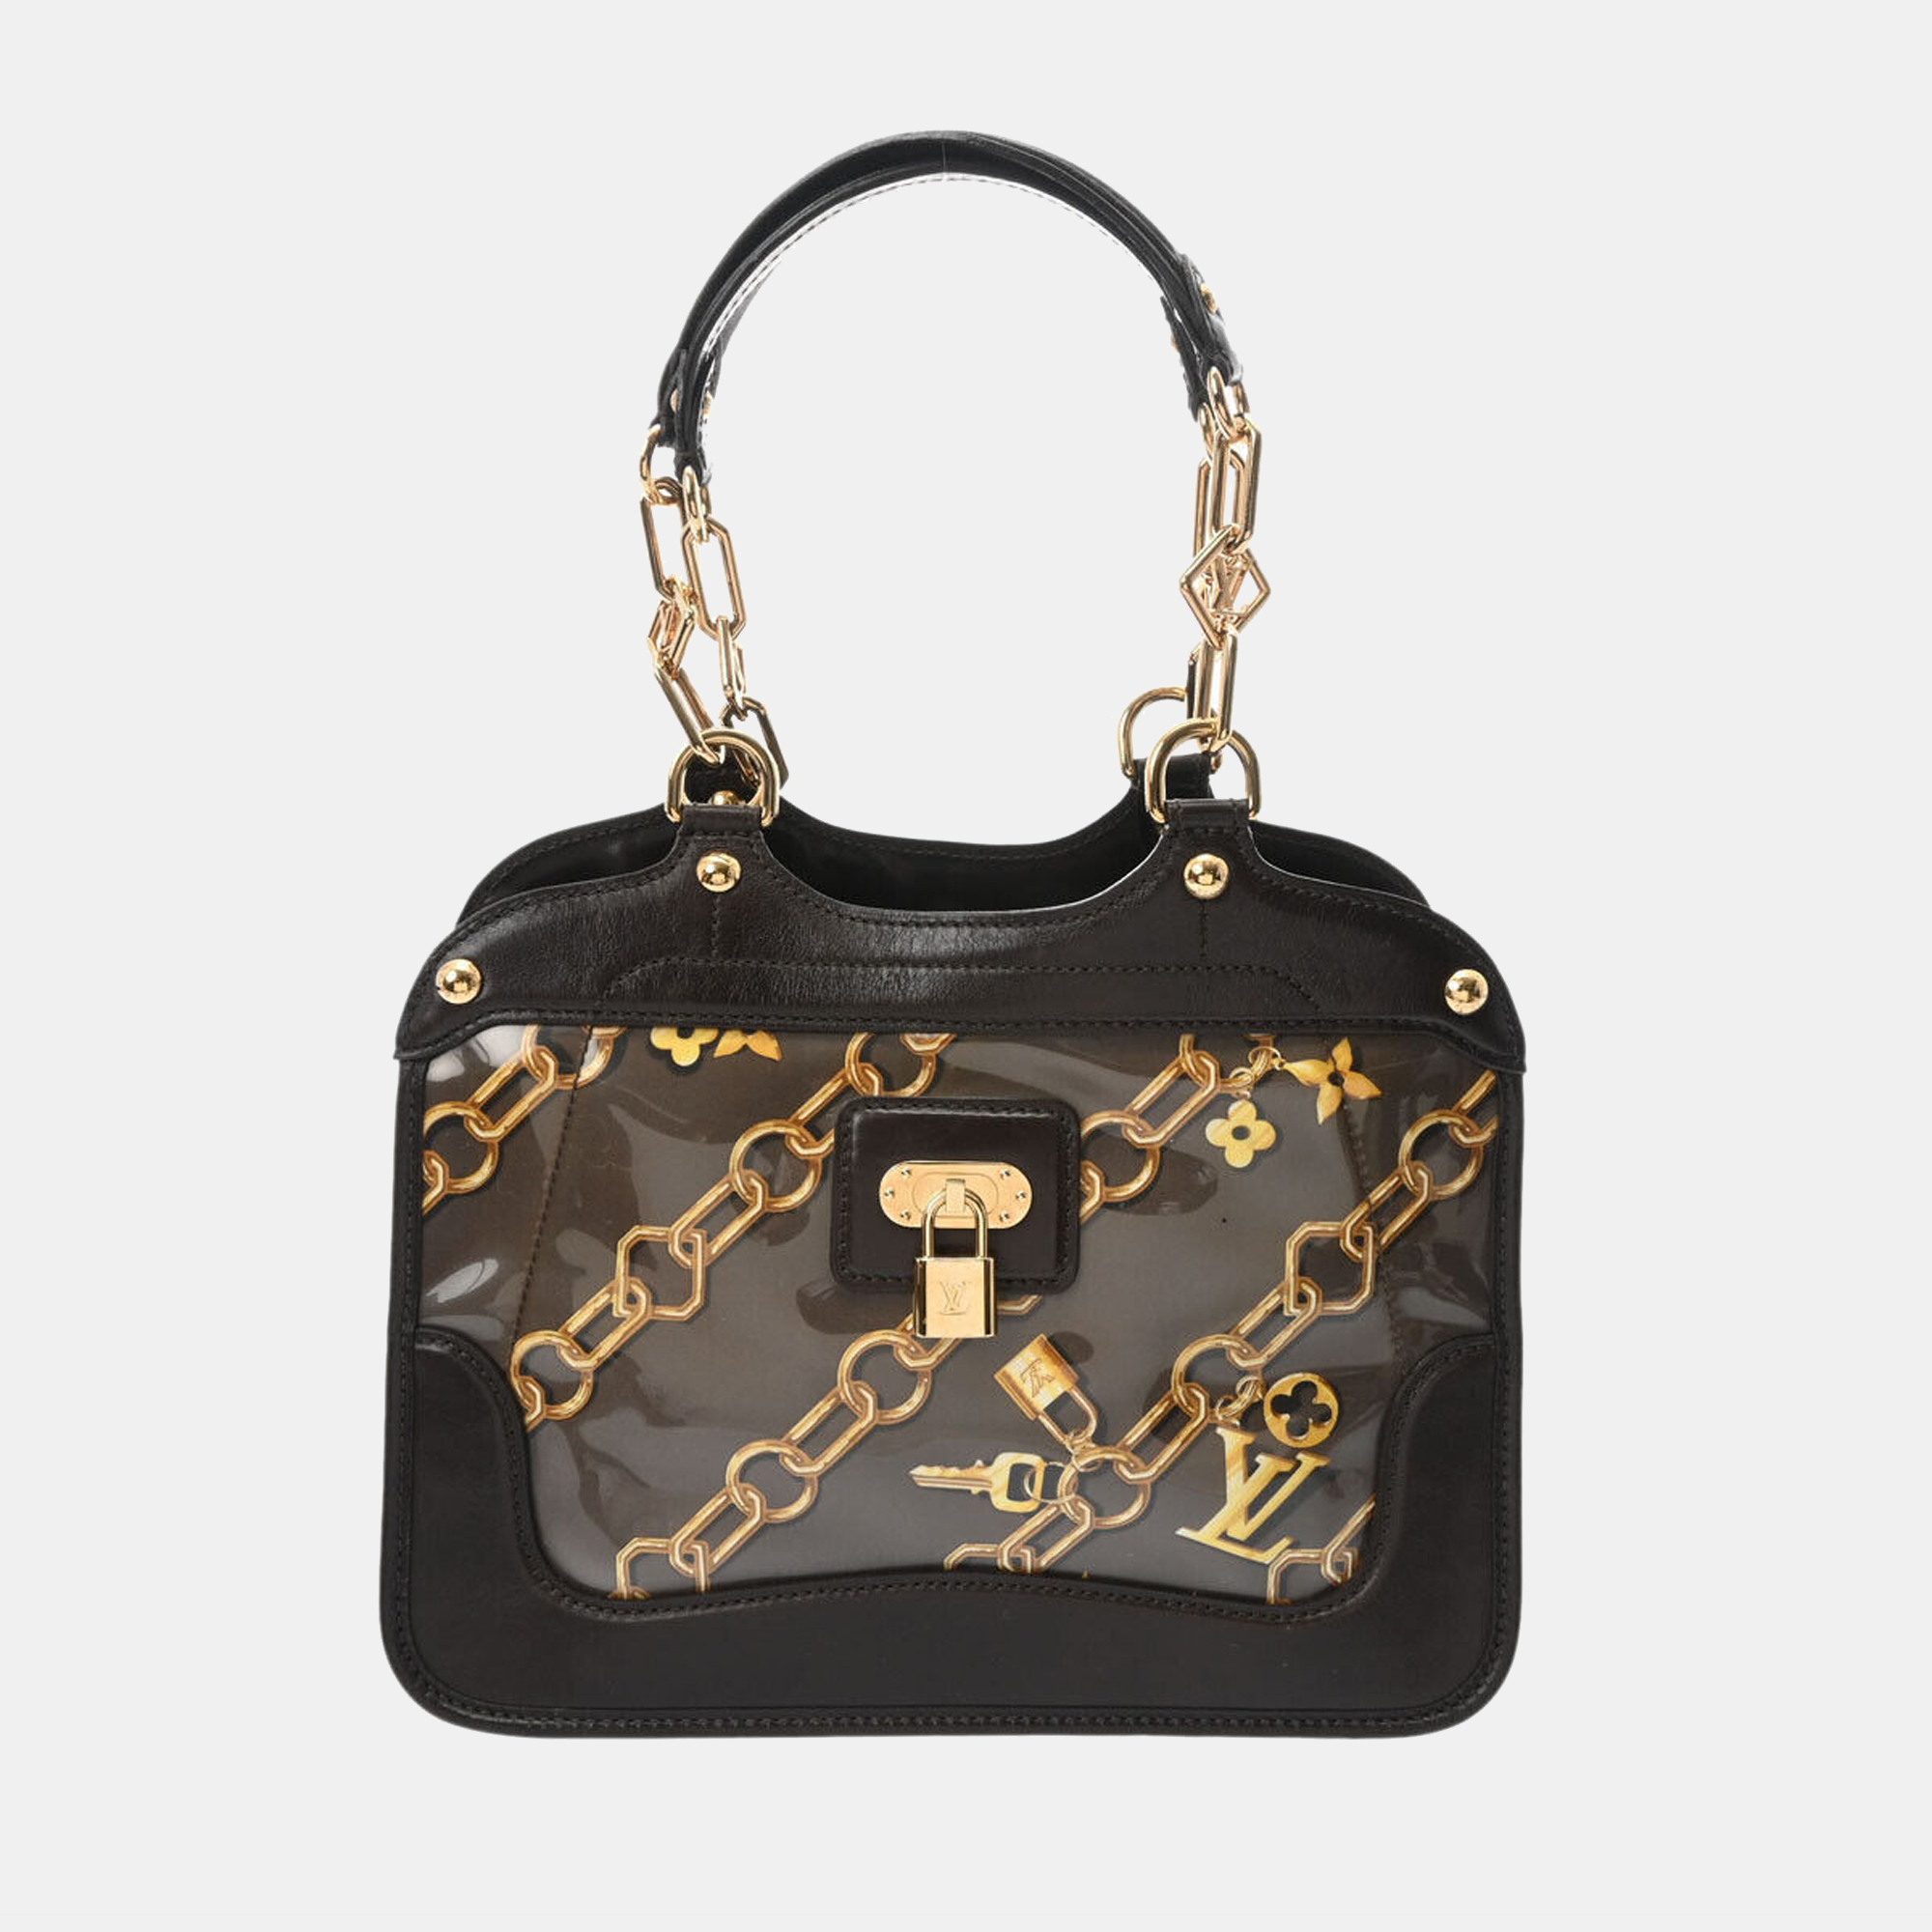 Pre Owned Louis Vuitton Handbags, Used Louis Vuitton